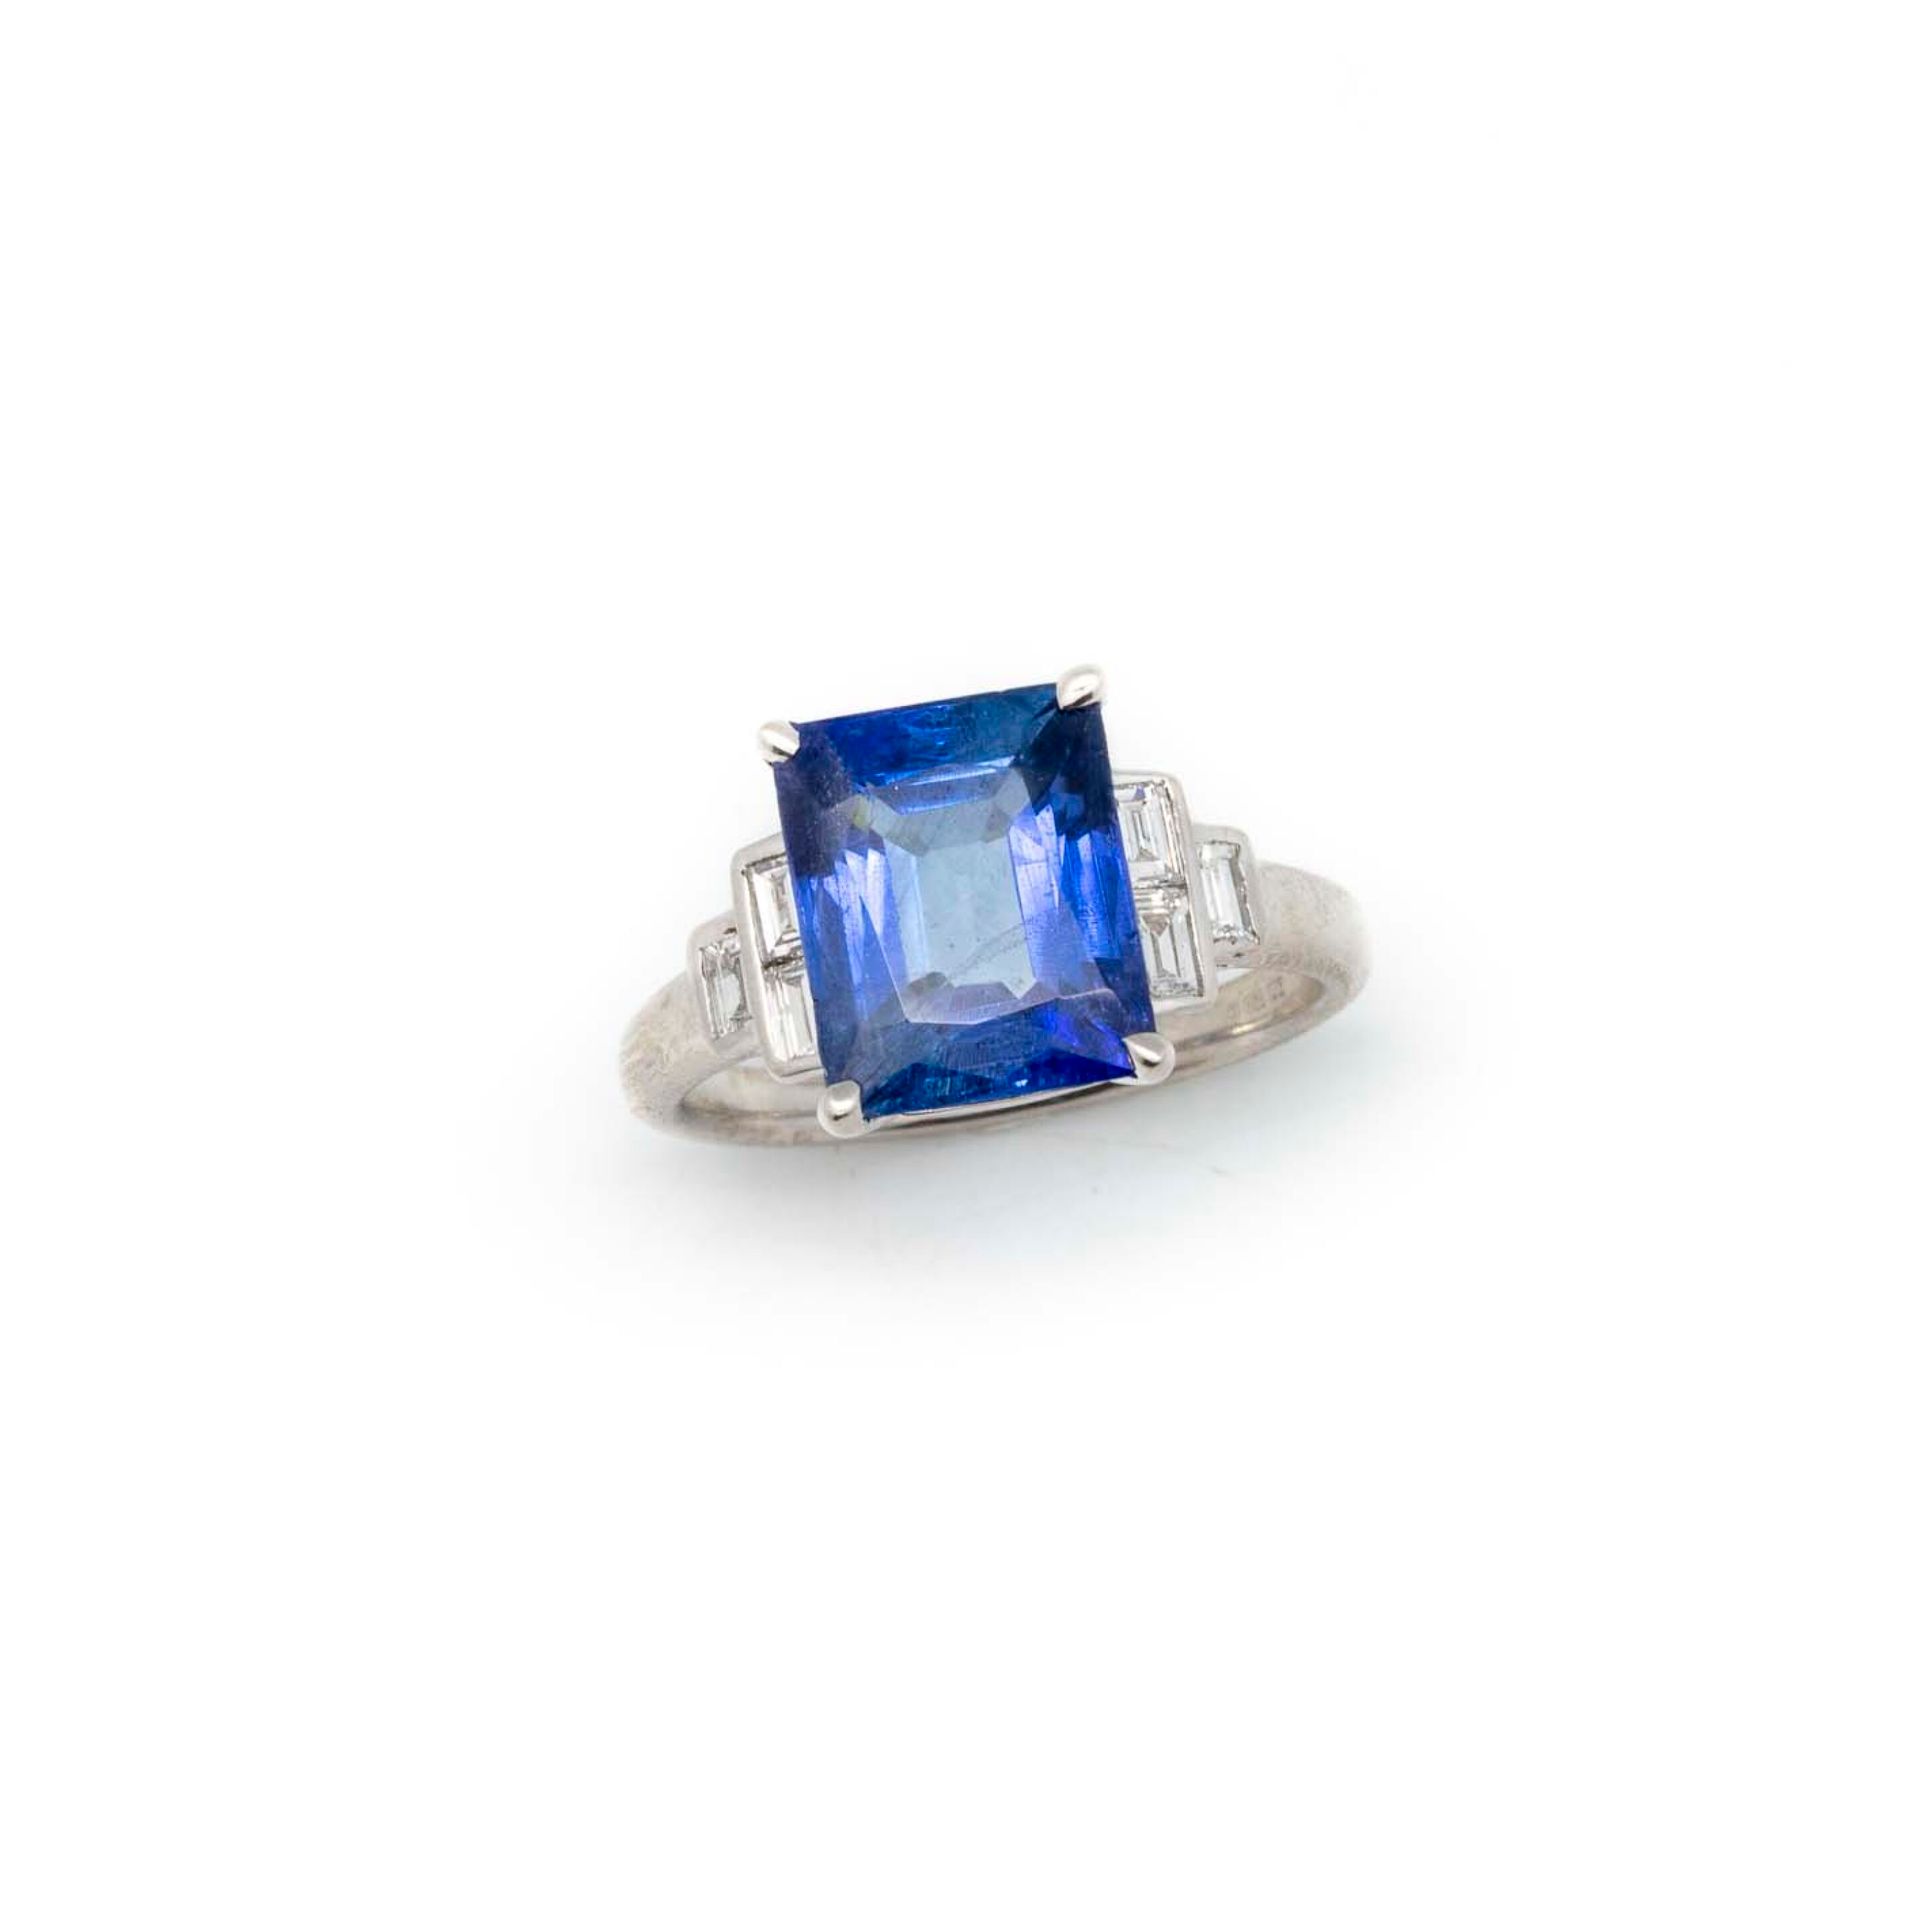 Null 白金戒指，镶嵌着一颗重达5.97克拉的锡兰蓝宝石和层层叠叠的方形钻石

LGP证书，未经加热的蓝宝石

TDD : 54

毛重：5.3克。